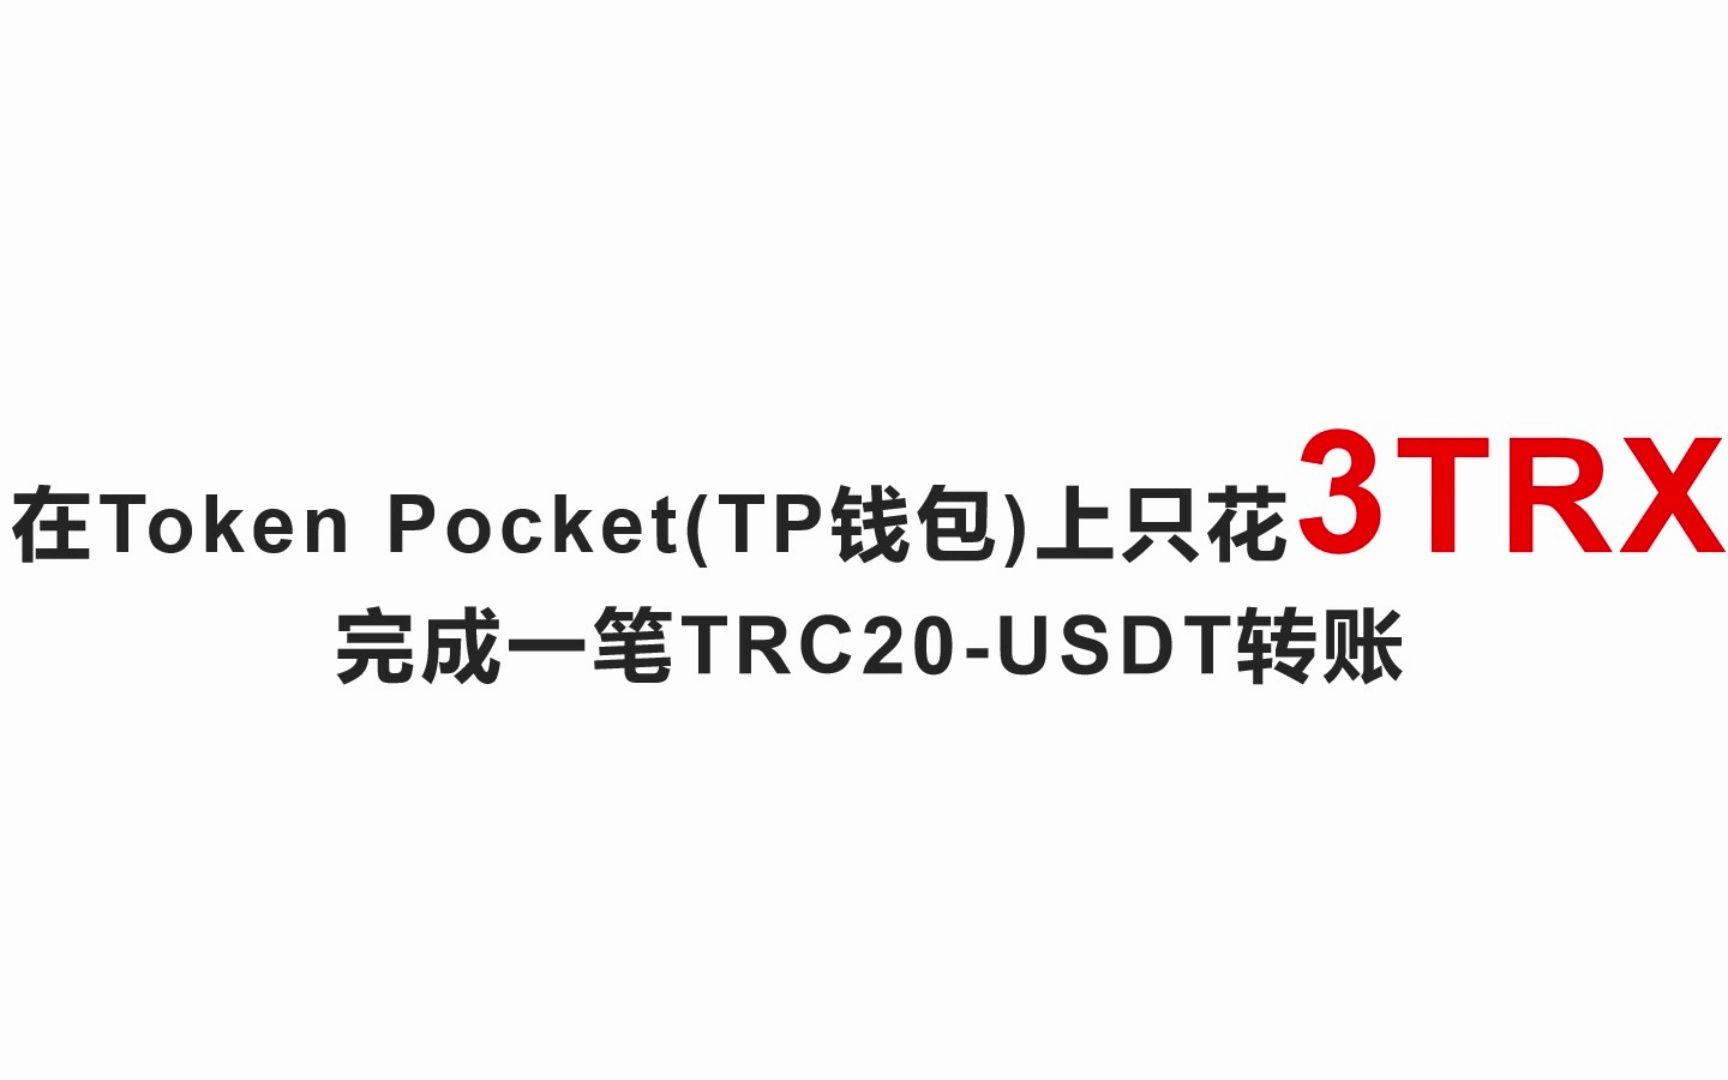 tptoken钱包官方下载，tokenpocketpro tp钱包